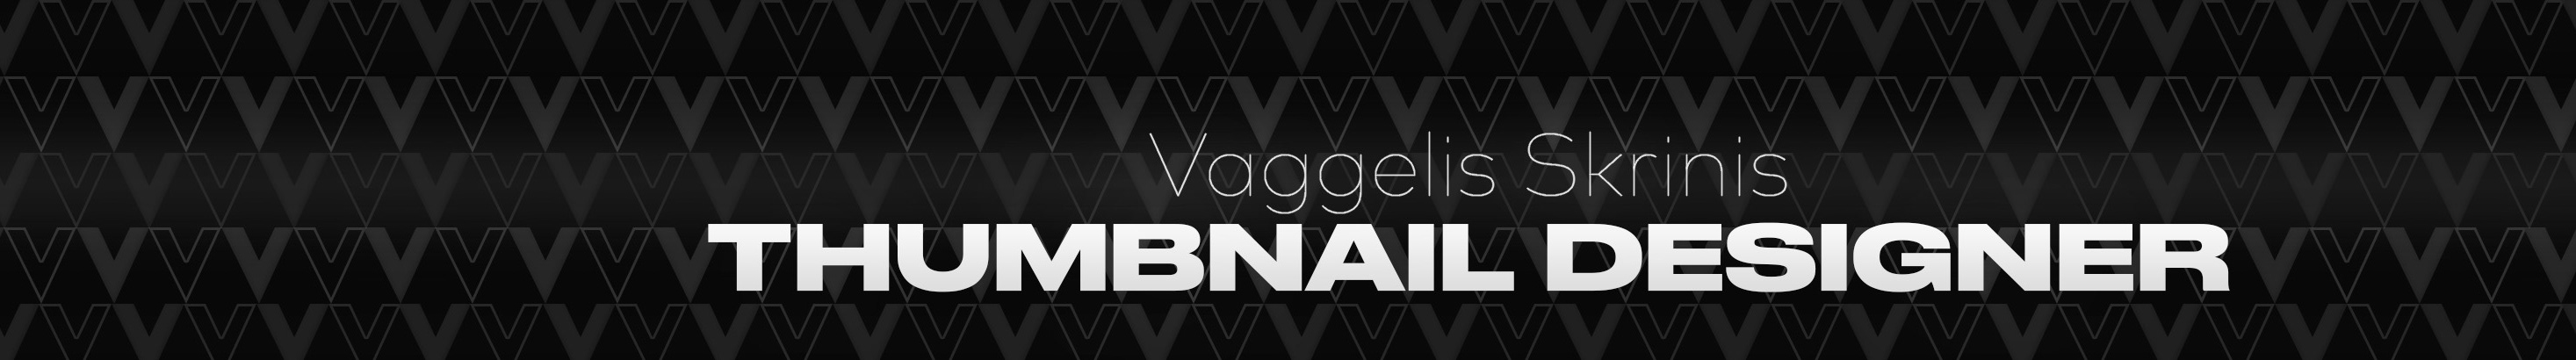 Vaggelis Skrinis's profile banner